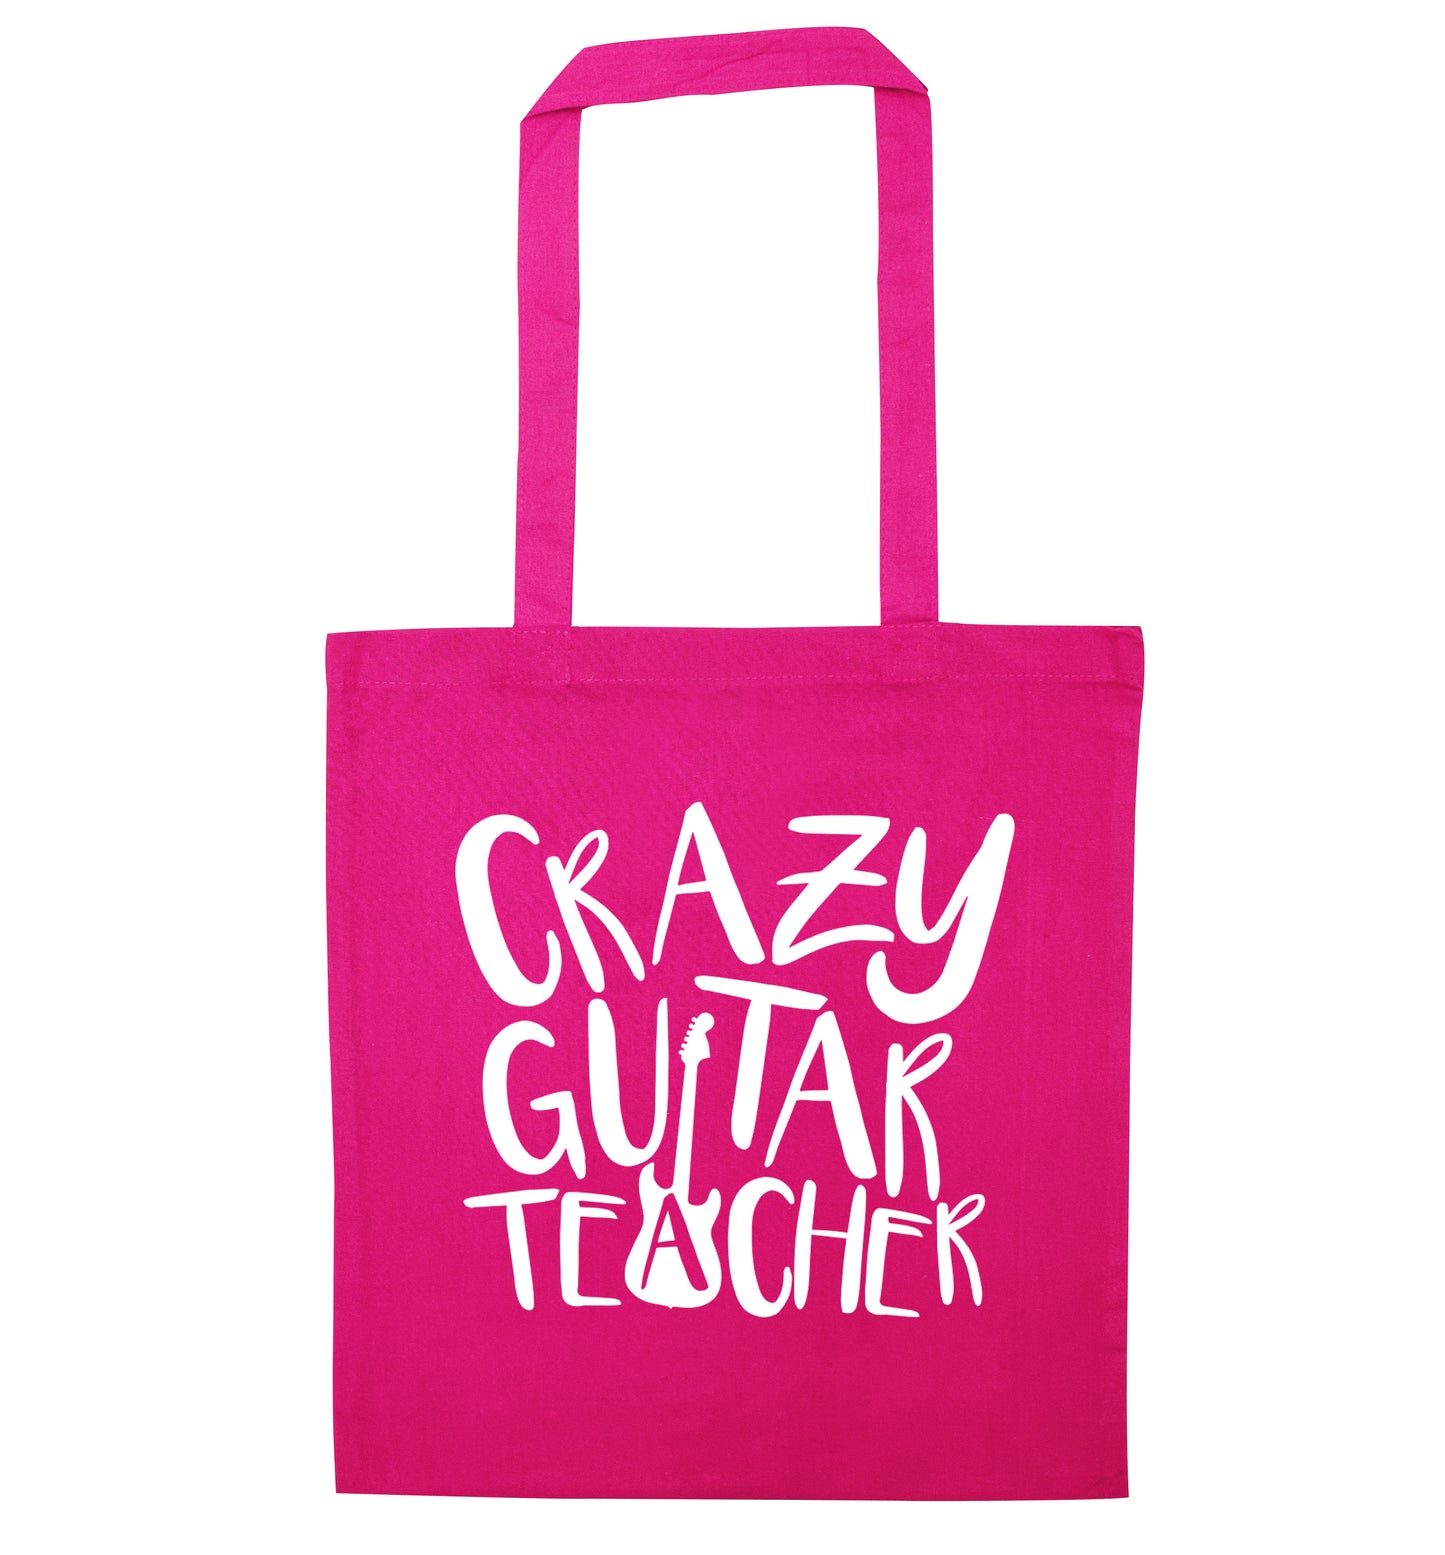 Crazy guitar teacher pink tote bag